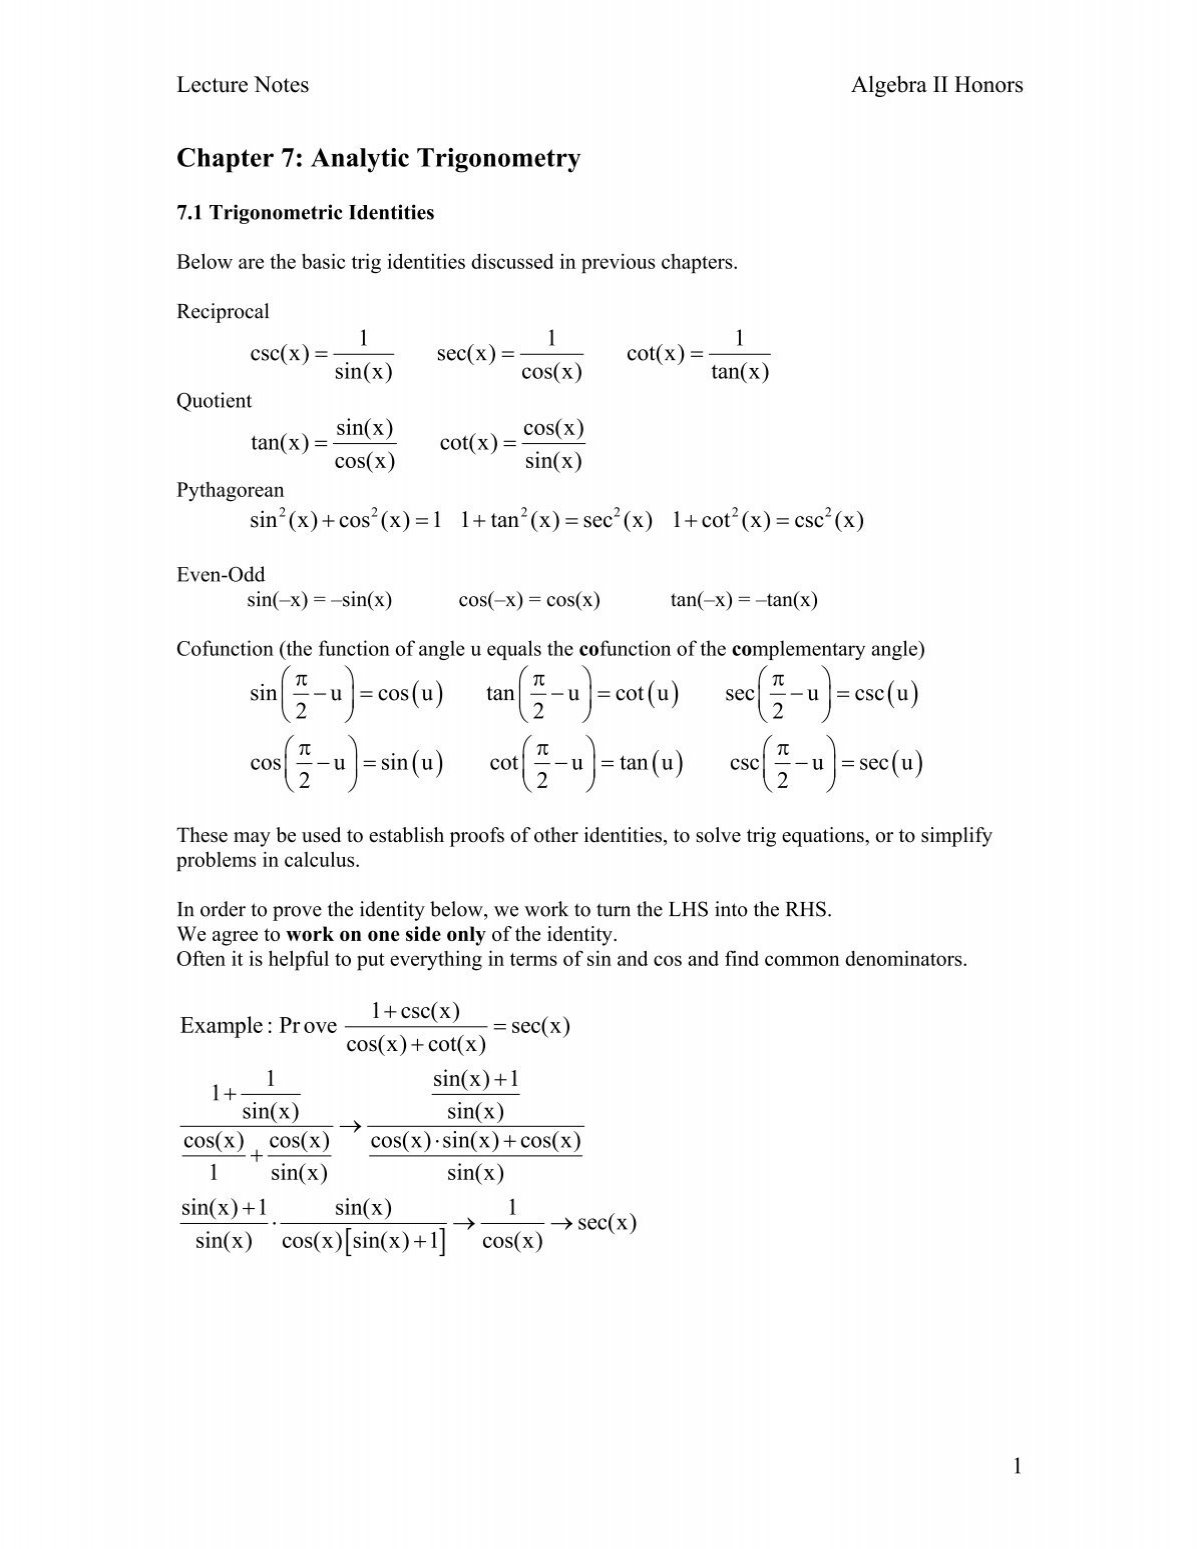 Chapter 7 Analytic Trigonometry